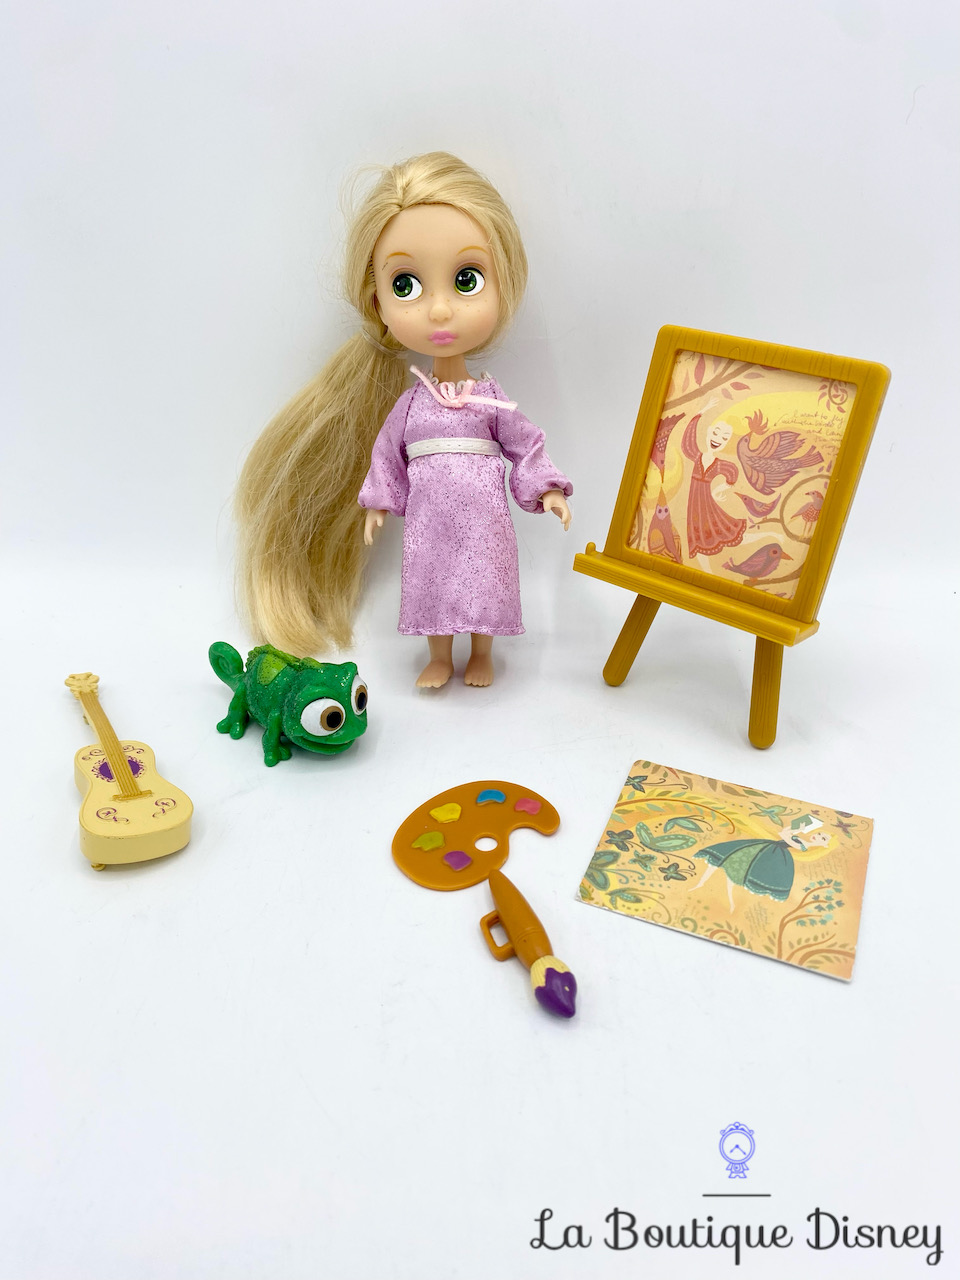 Disney Store Coffret de poupees Princesse Jasmine, Animators 2020